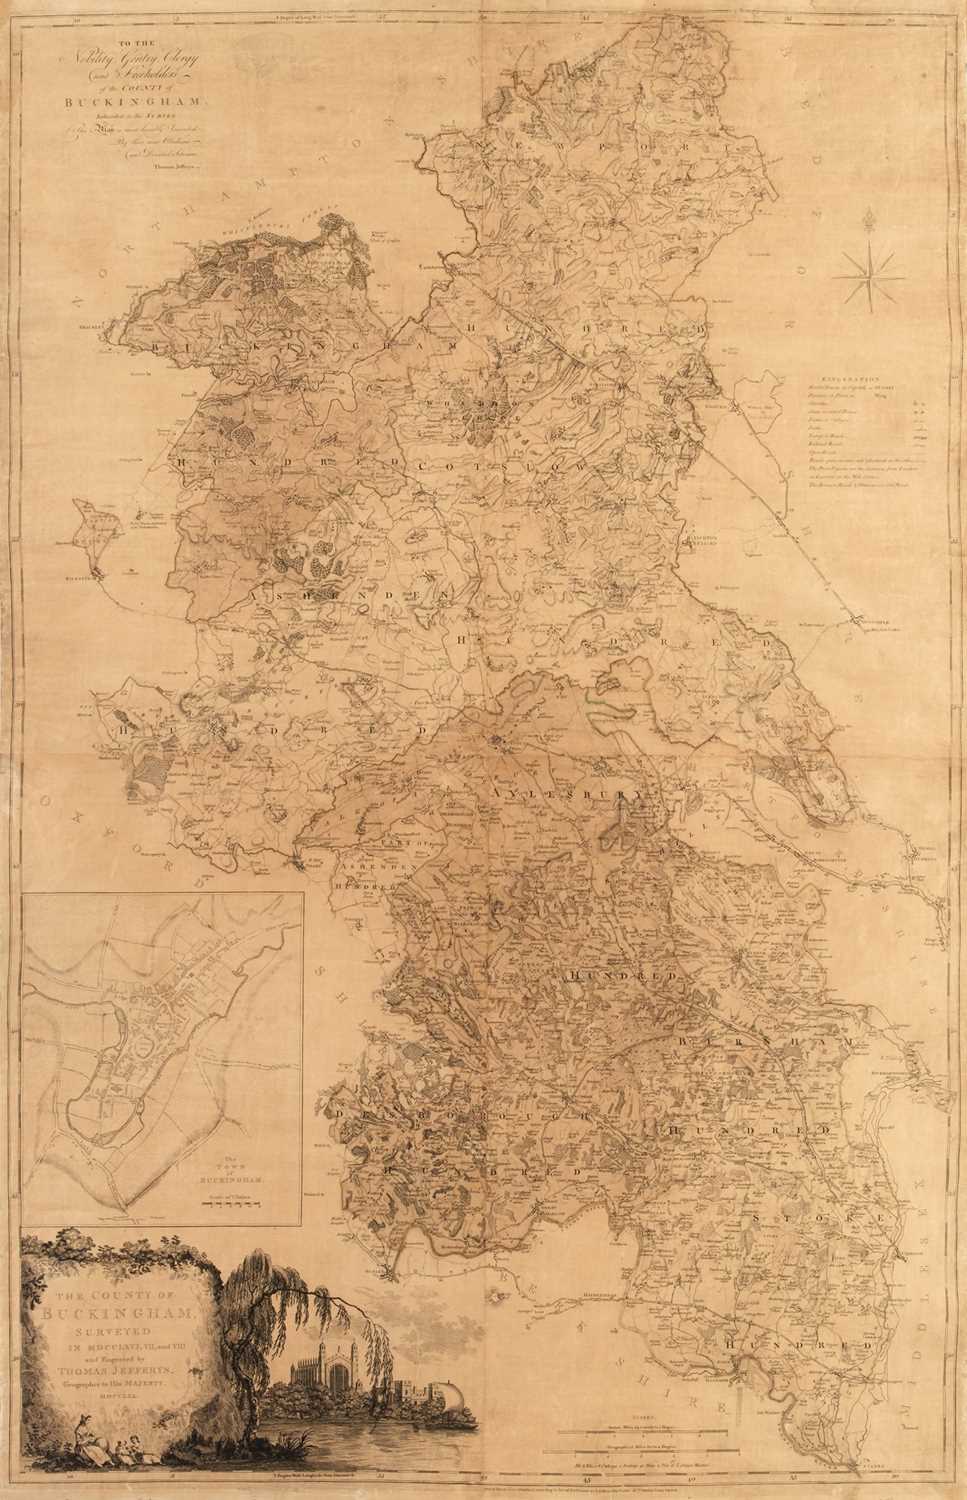 Lot 59 - Buckinghamshire. Jefferies (T.), The County of Buckingham surveyed..., 1770